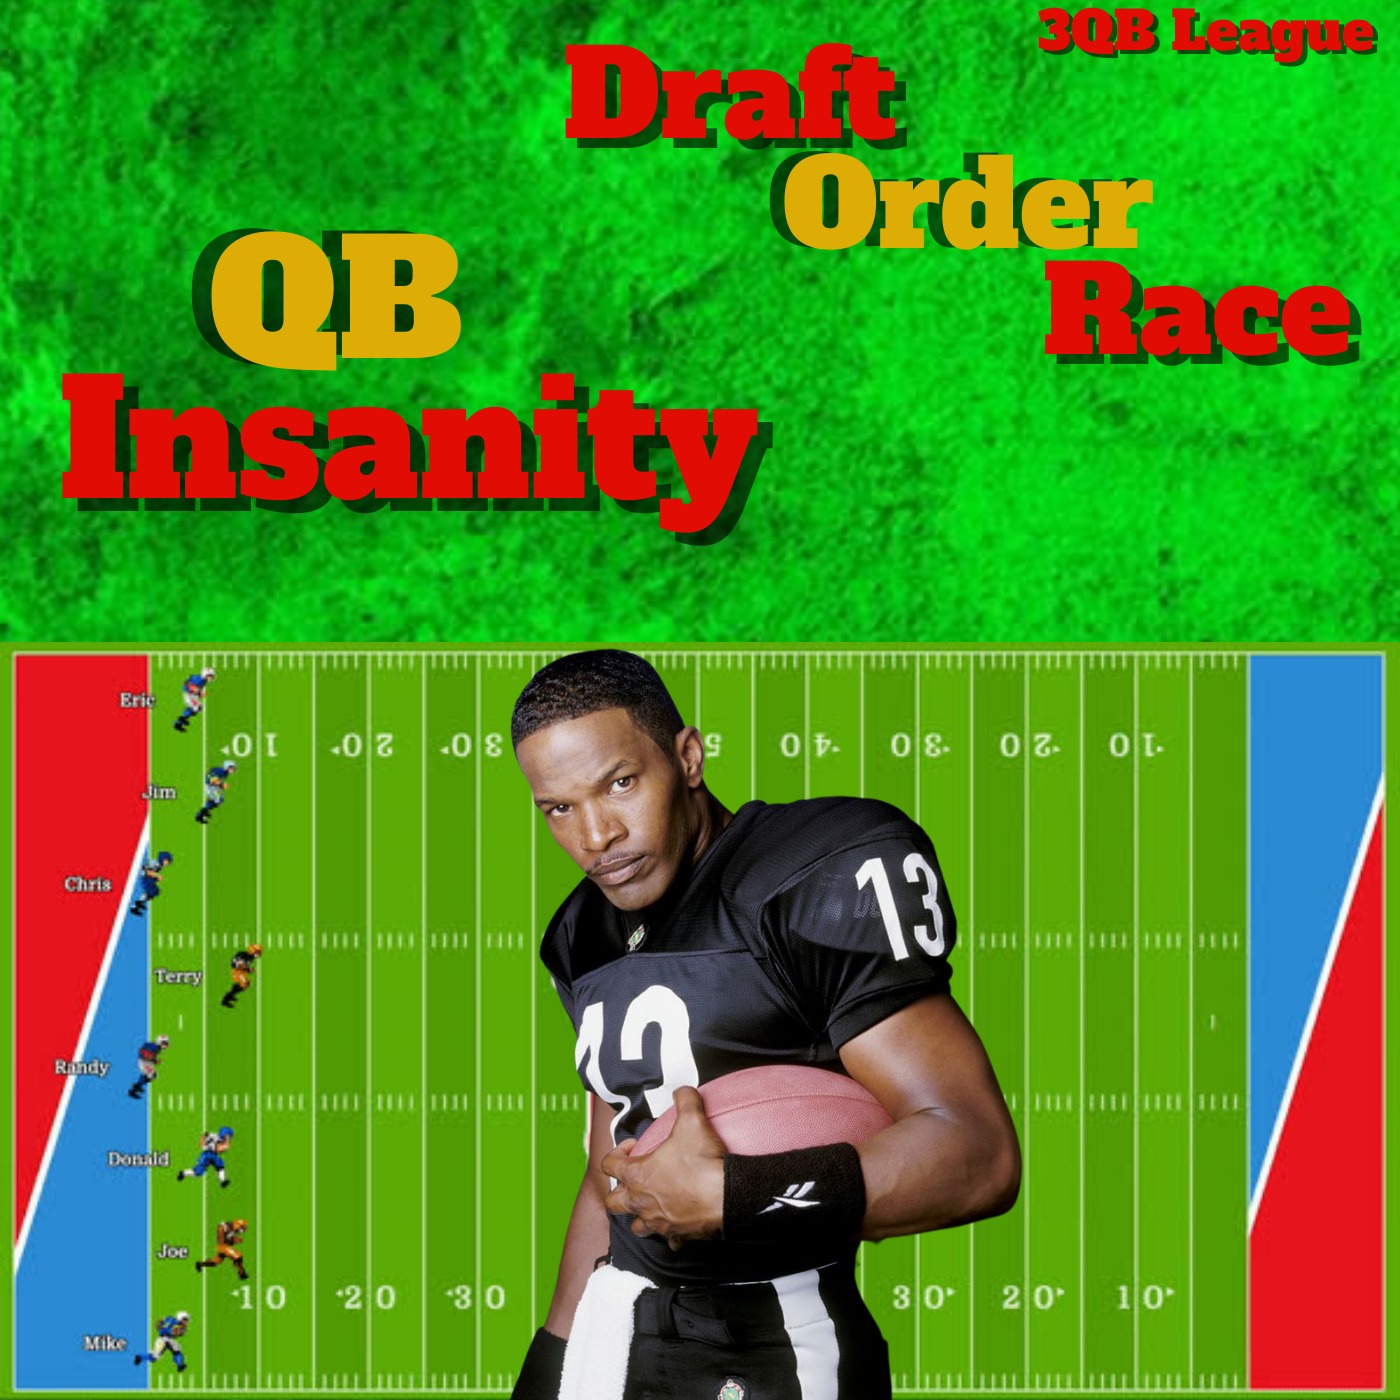 QB Insanity League Draft Order Race, 3QB League Image